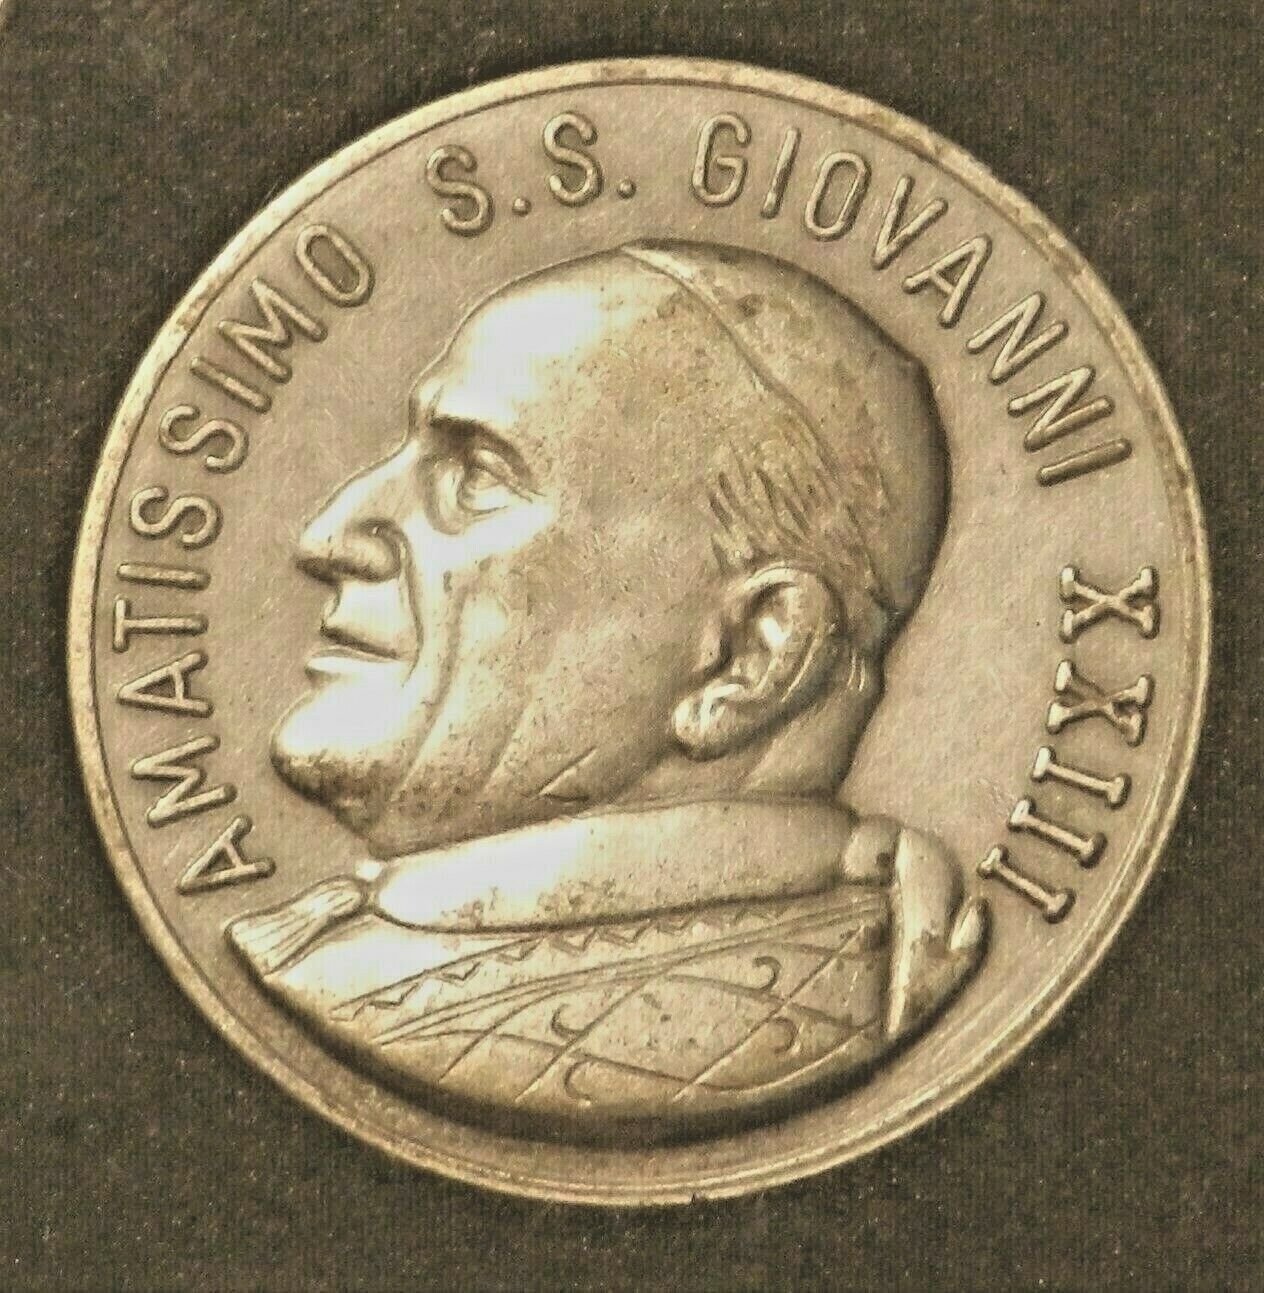 Brazil Catholic Medal - Homage to the Popes John Paul II and John XIII  See PICS